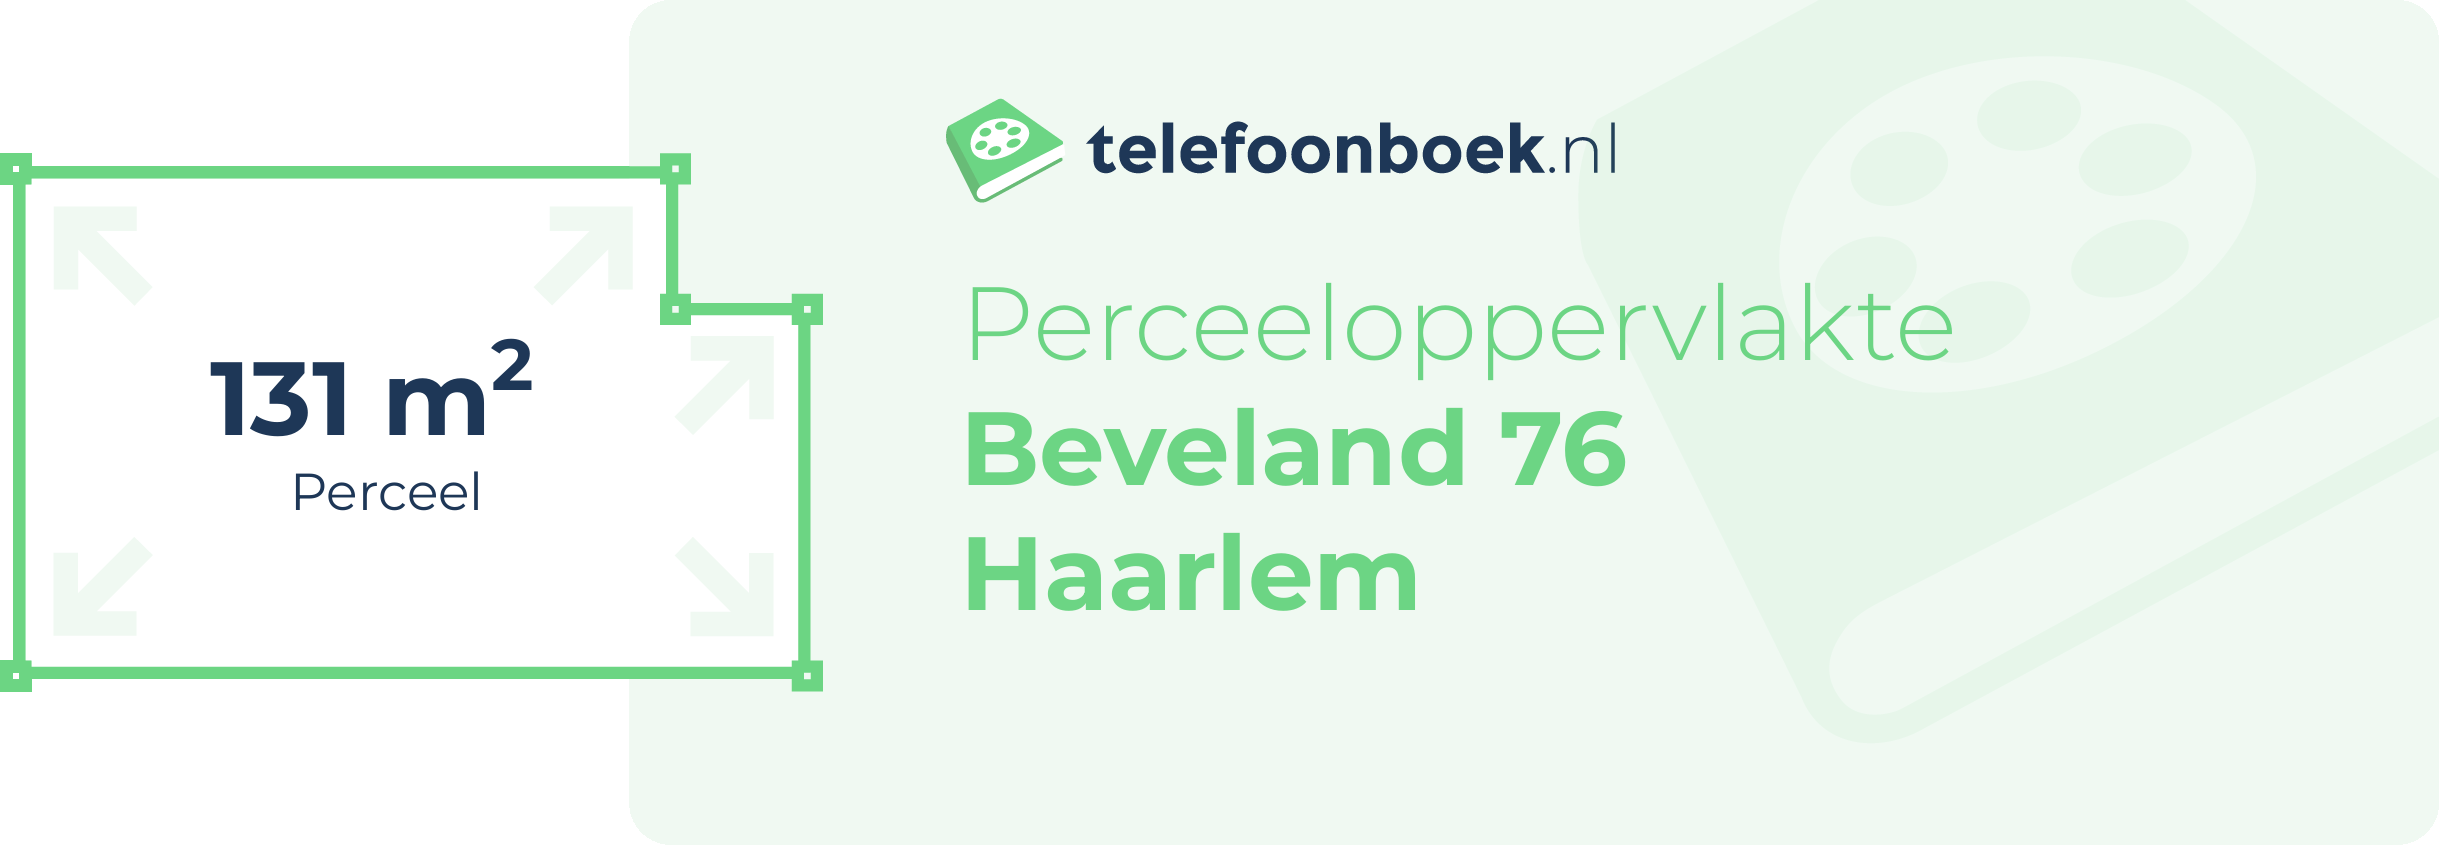 Perceeloppervlakte Beveland 76 Haarlem